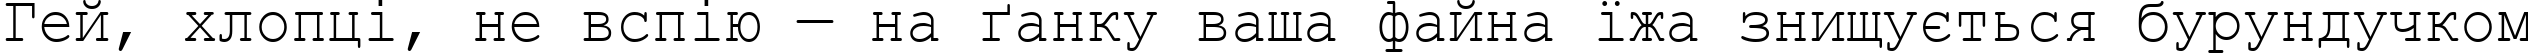 Пример написания шрифтом Courier New Cyr_90n текста на украинском